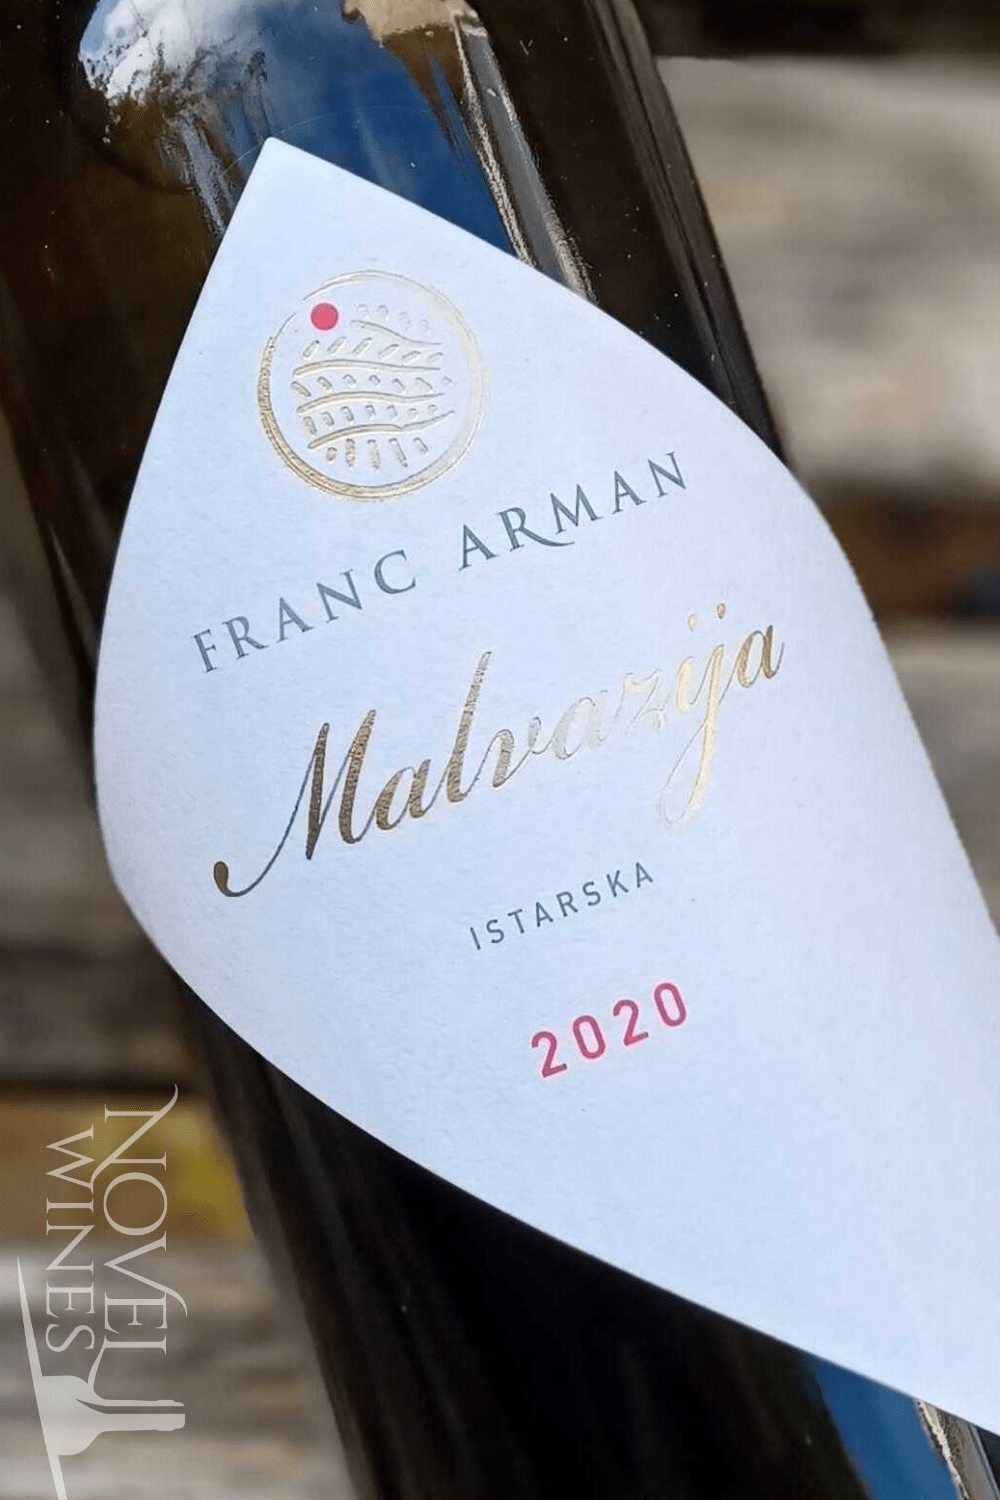 Franc Arman White Wine Franc Arman Malvazija Istarska 2020, Croatia